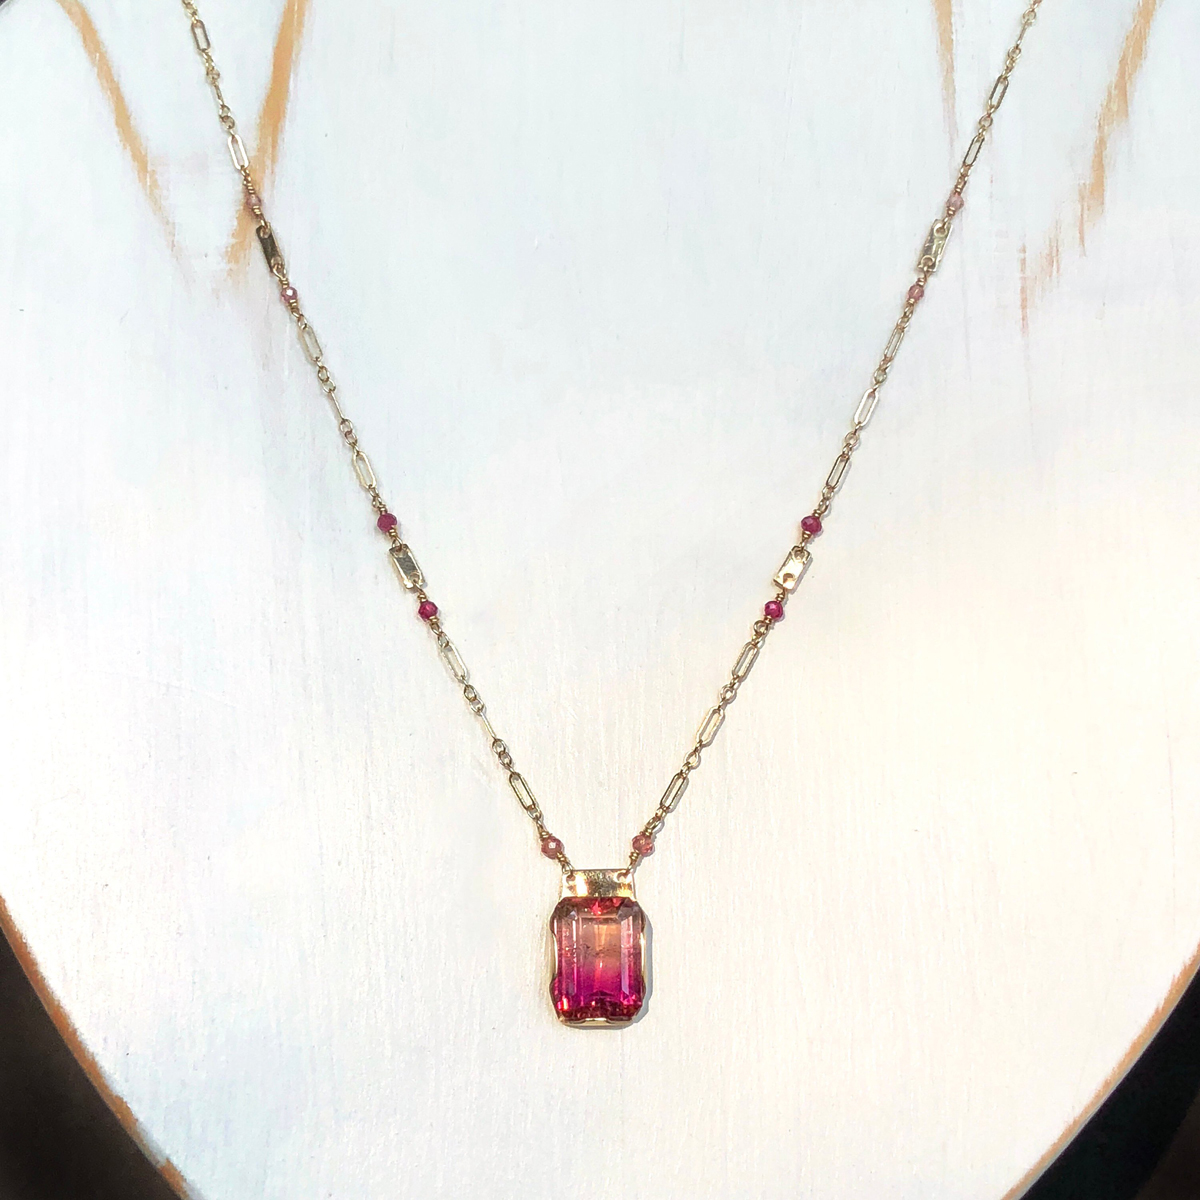 One of a Kind Tourmaline Necklace from Jen Volkodav Jewelry Design